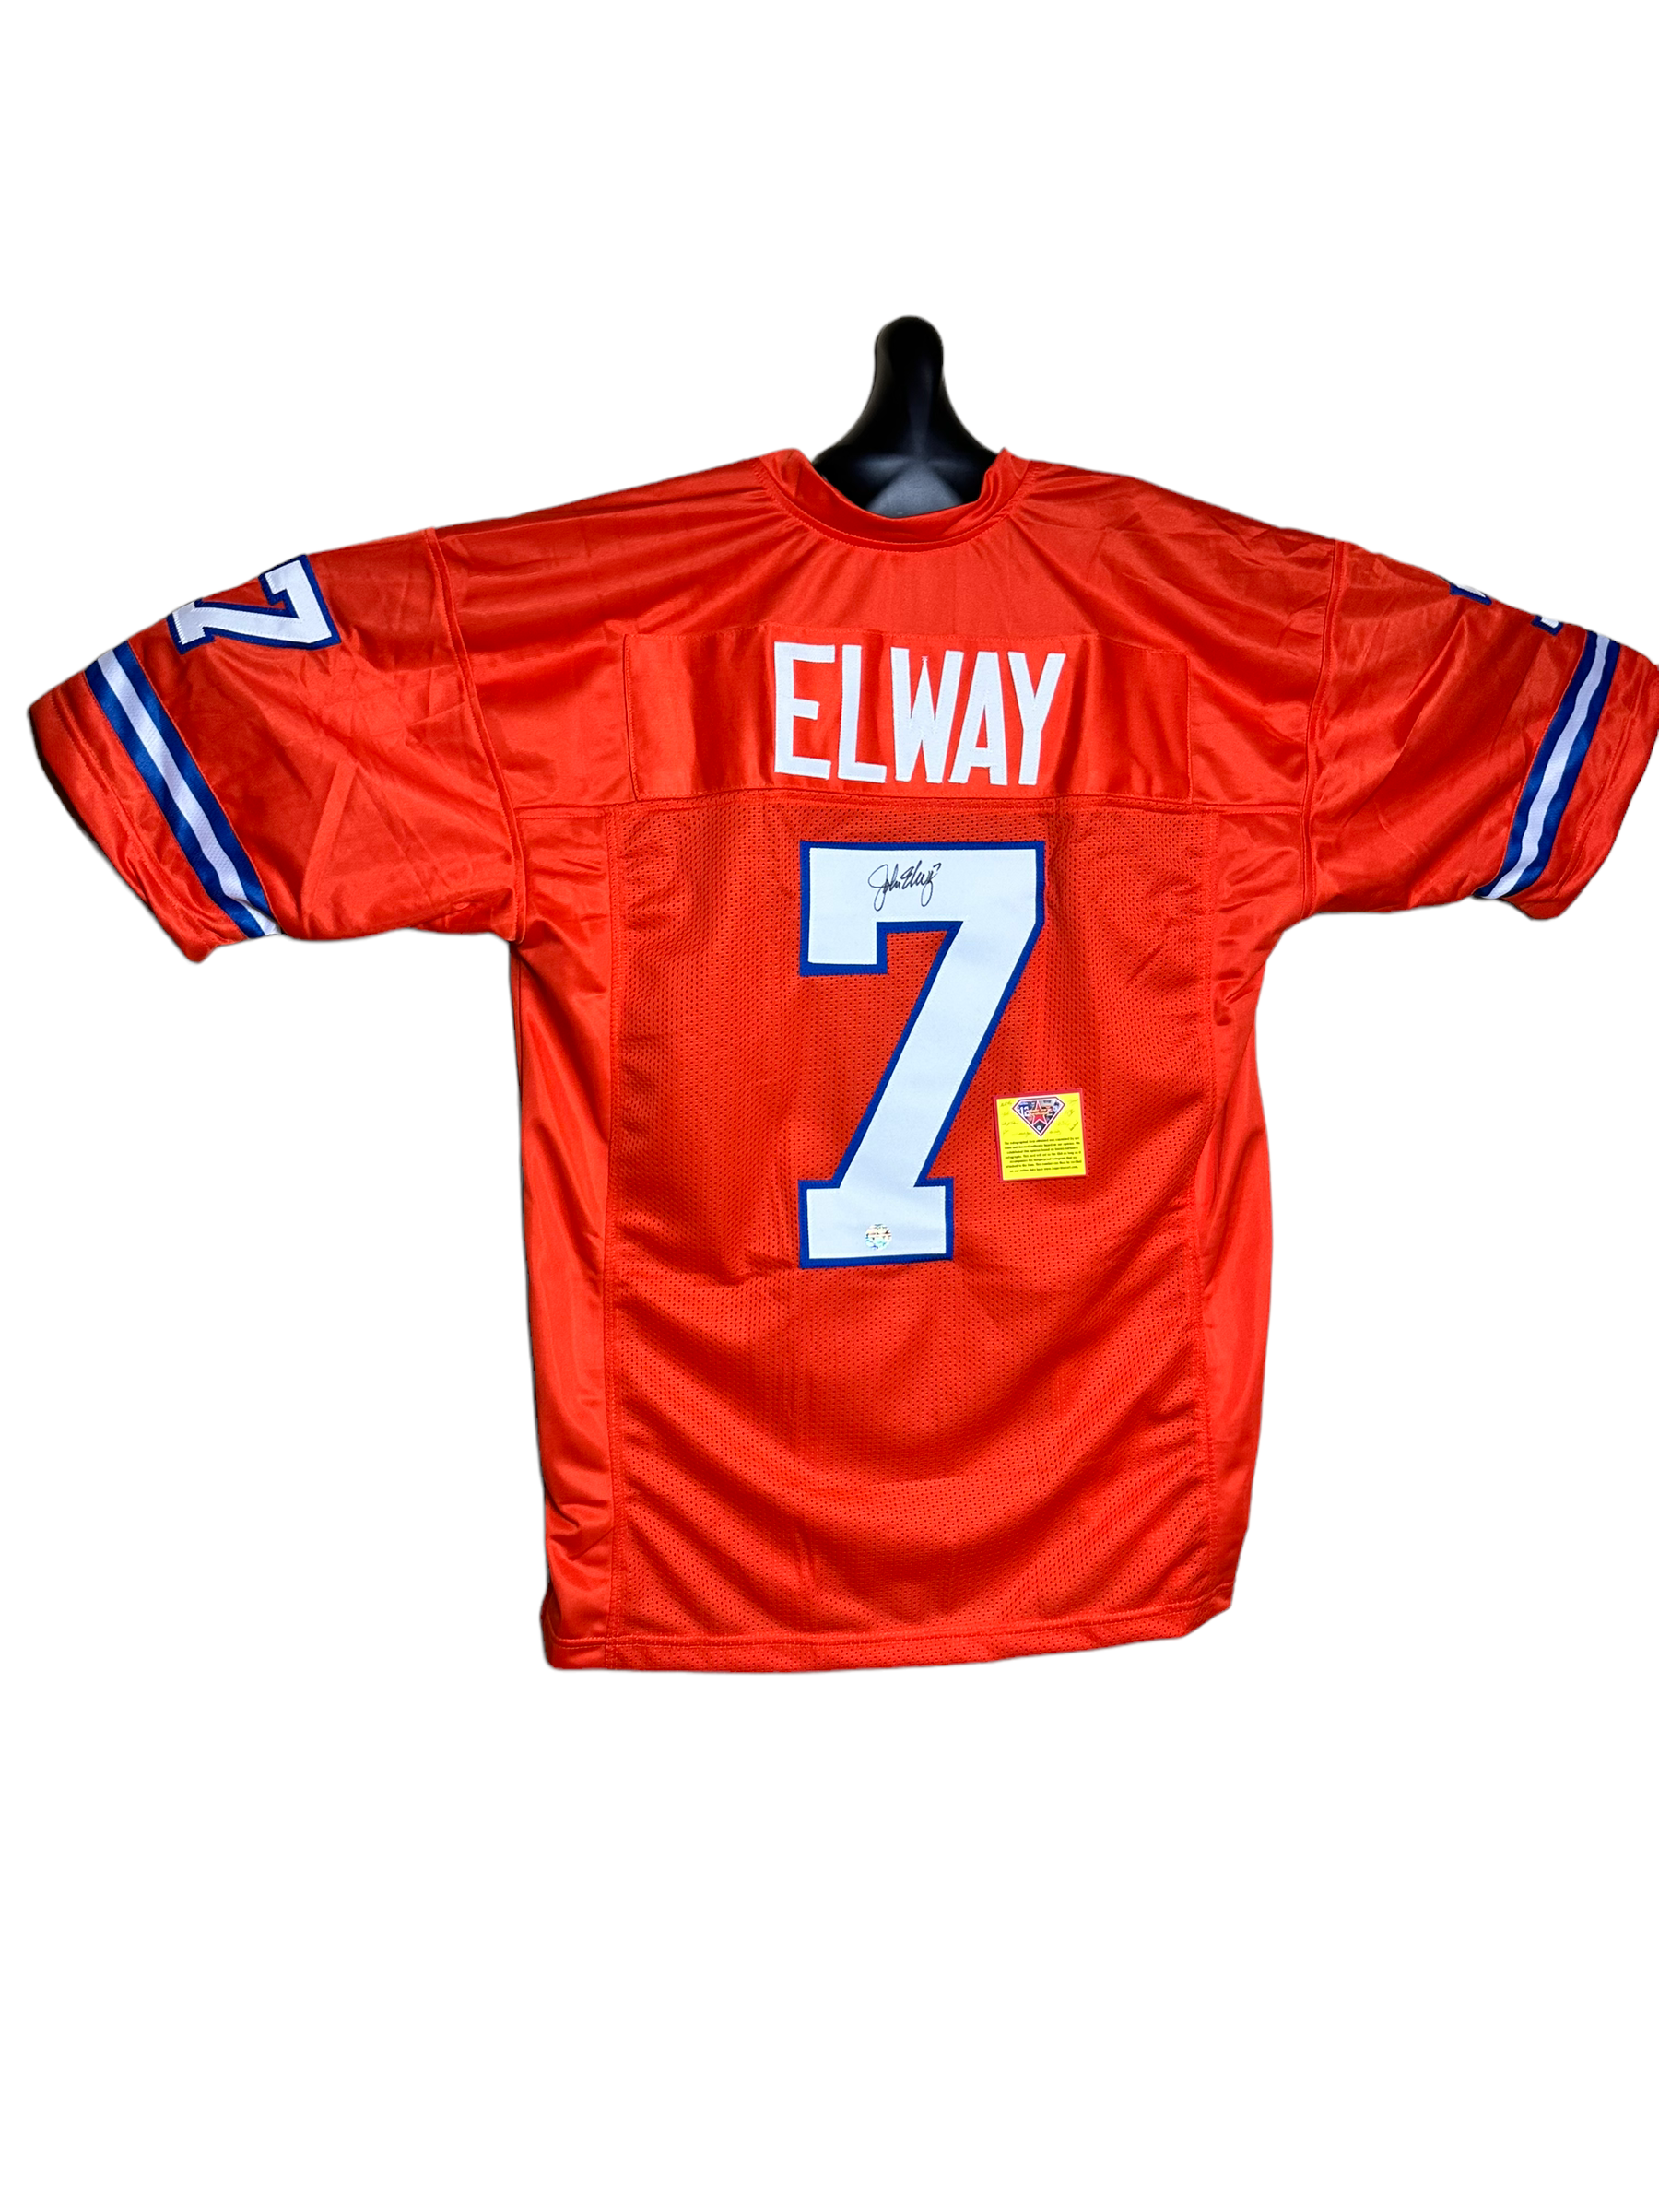 John Elway QB Broncos Hand Signed Home Jersey w/COA